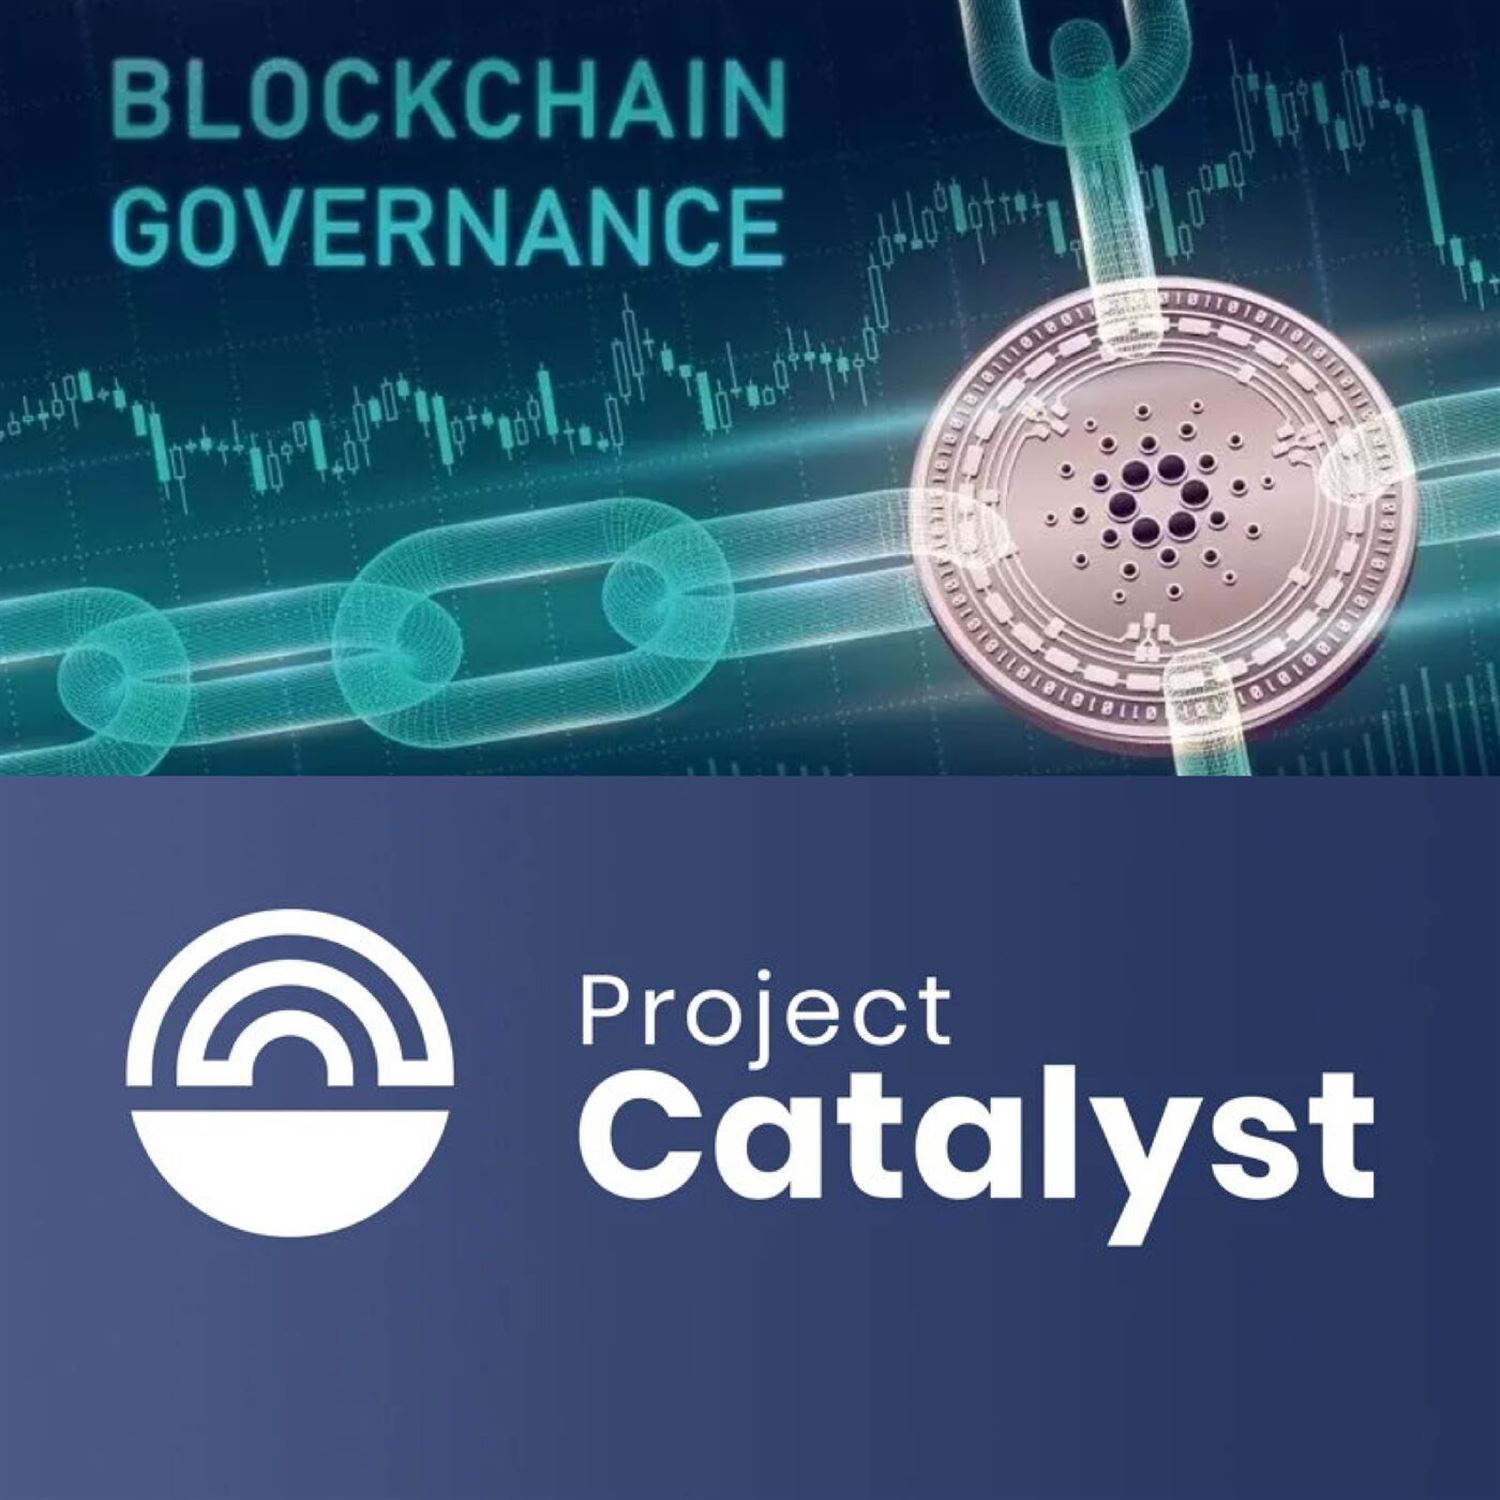 Blockchain governance